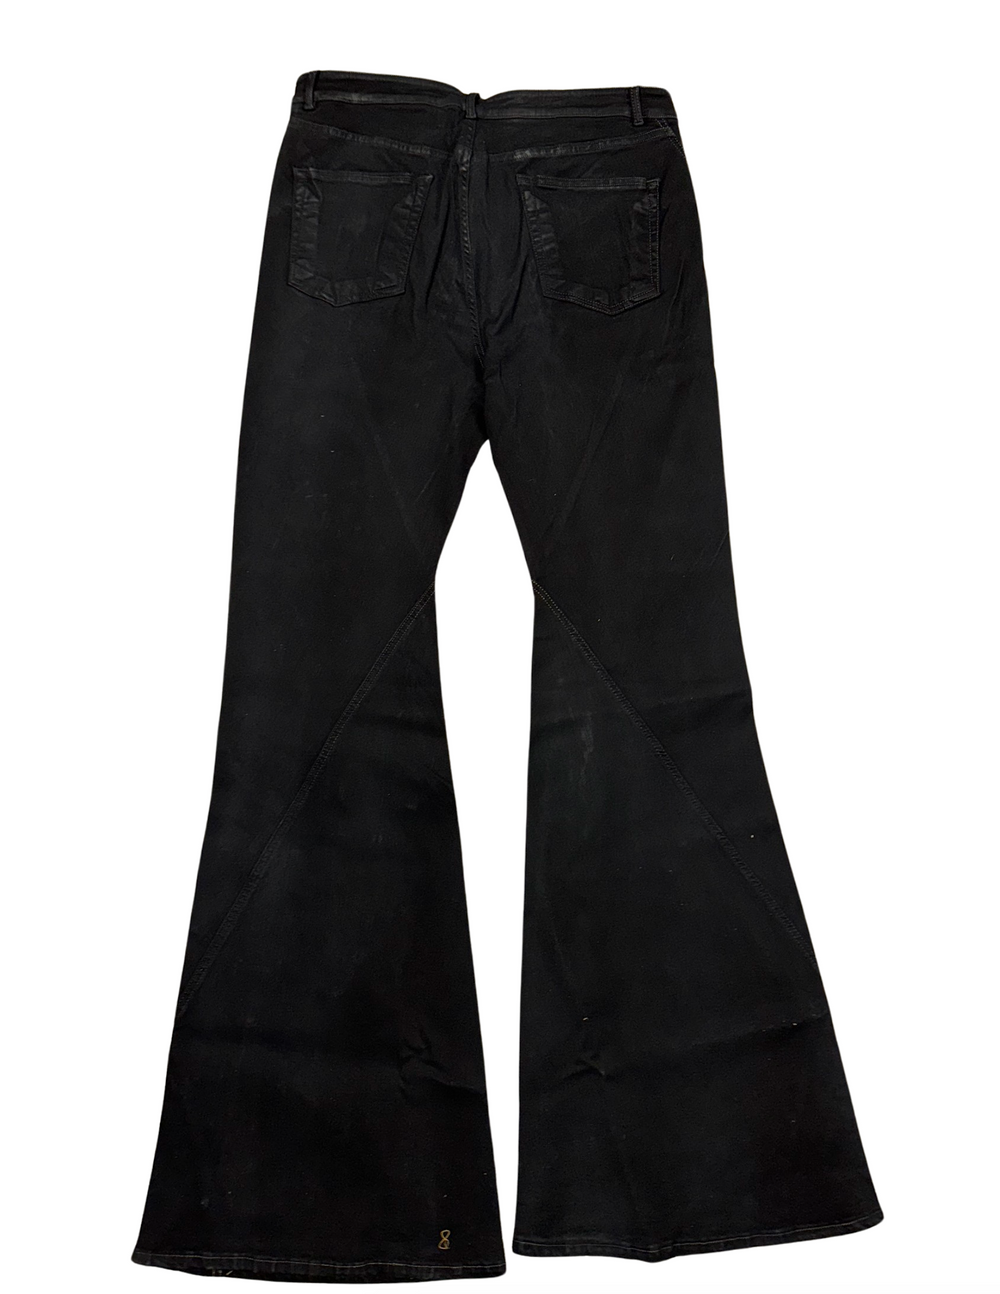 Rick Owens DRKSHDW 'Bias' Black Bootcut Jeans